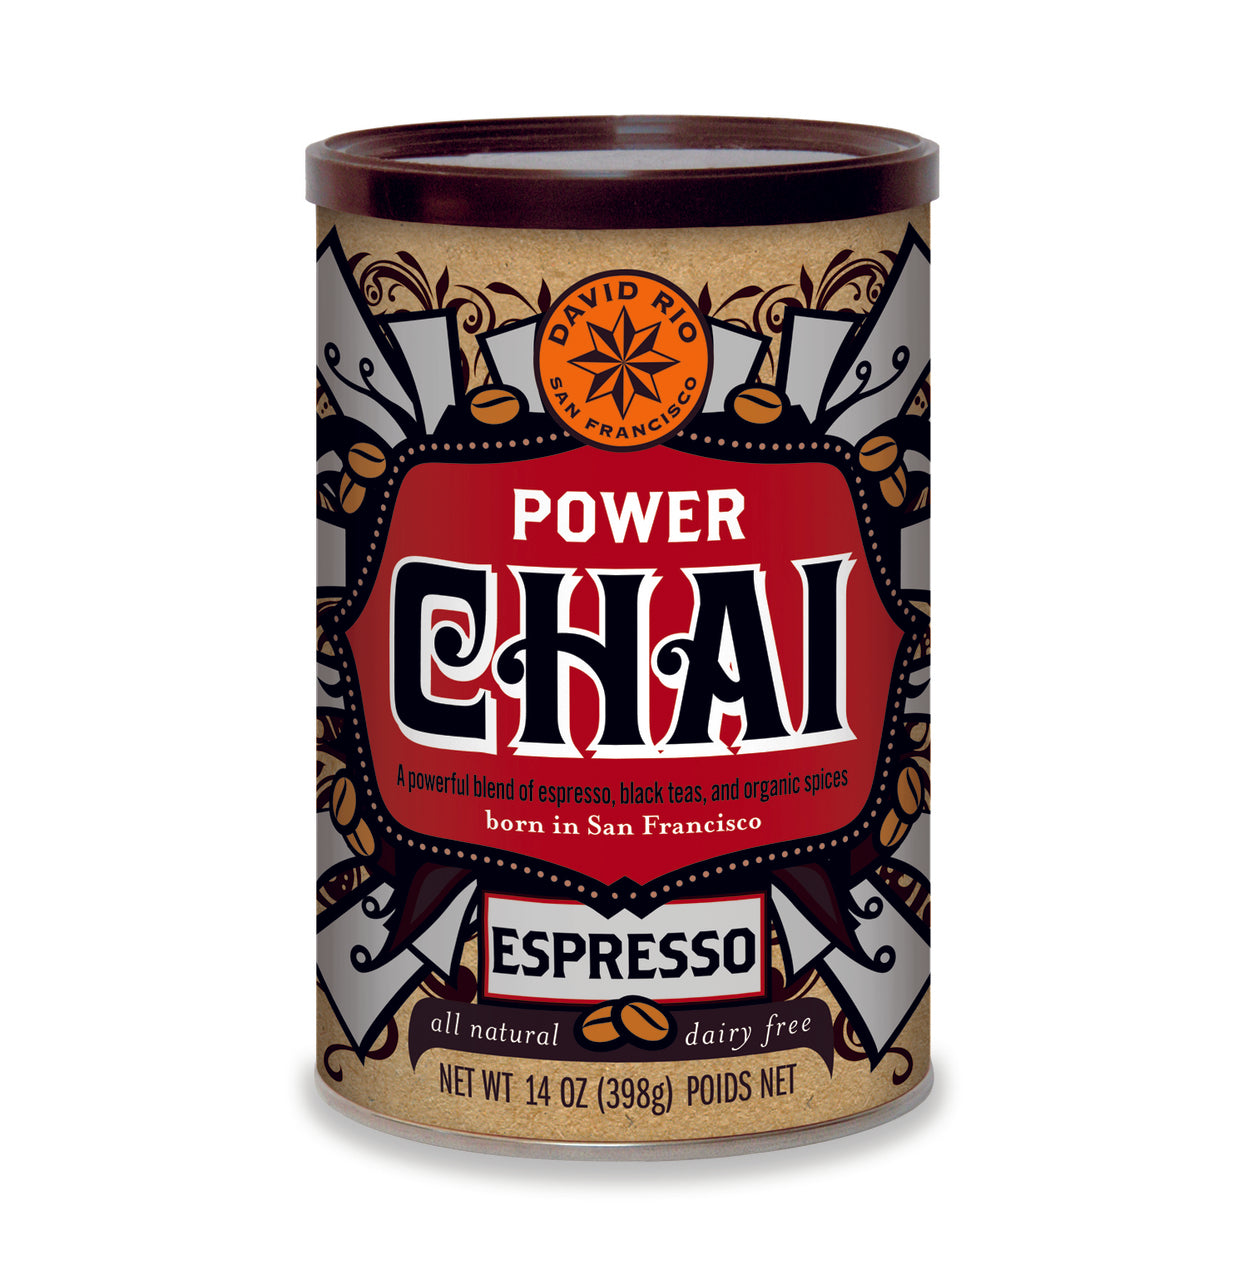 David Rio Power Chai - 14oz Canister: Power Chai w/ Espresso